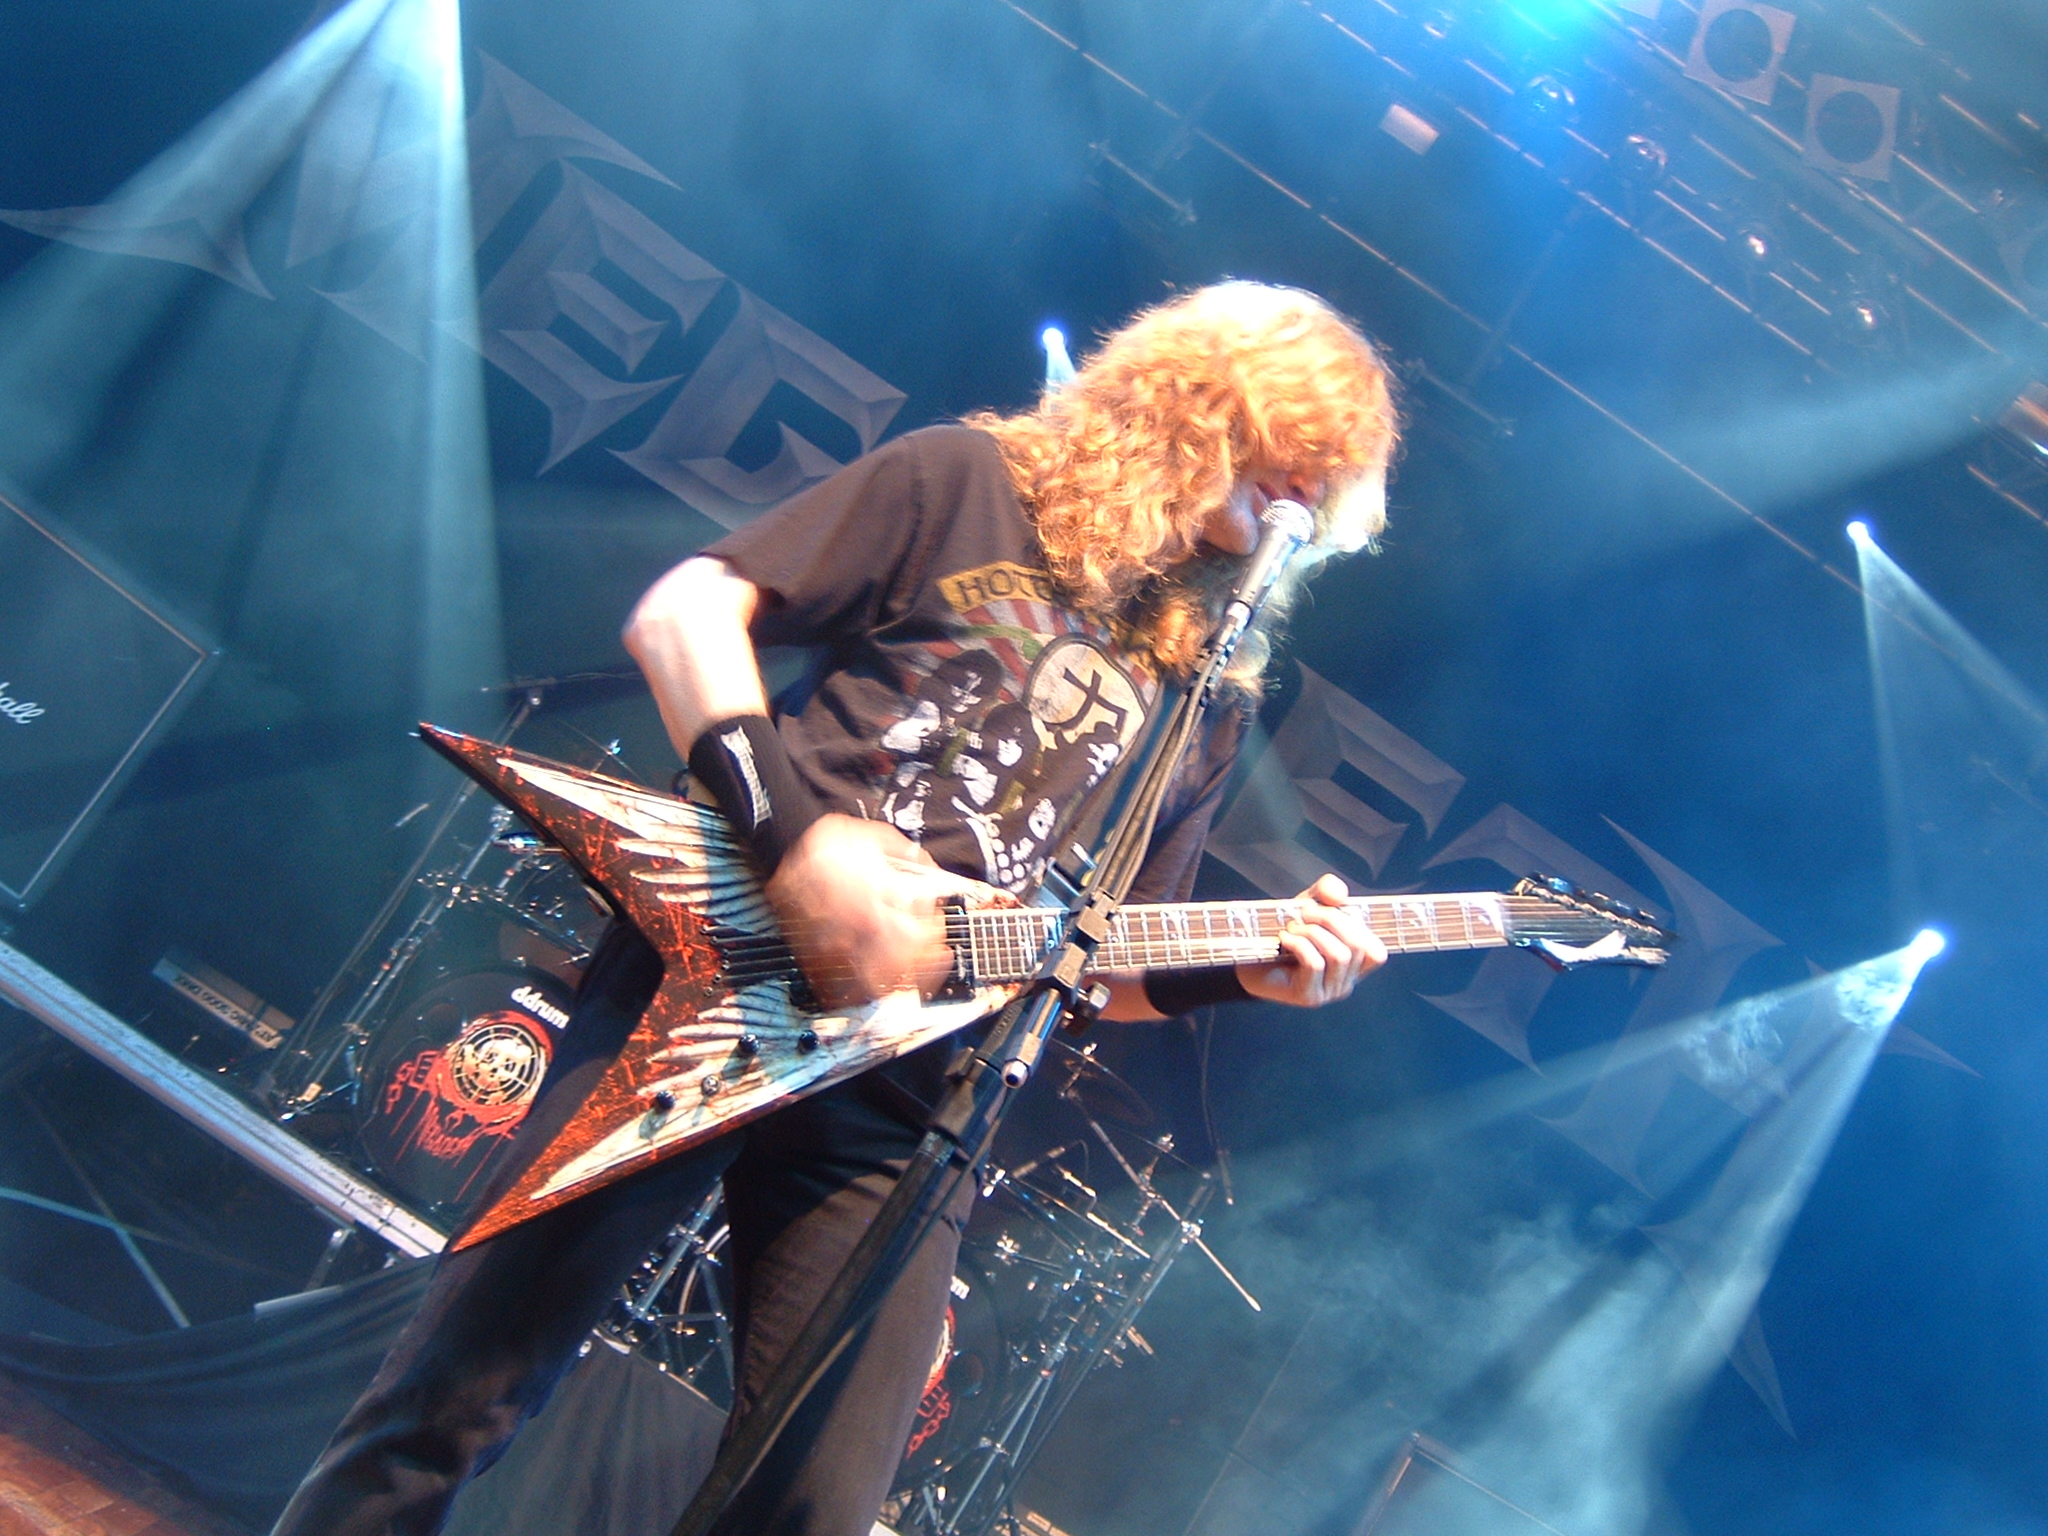 Megadeth Wallpaper Pictures Image